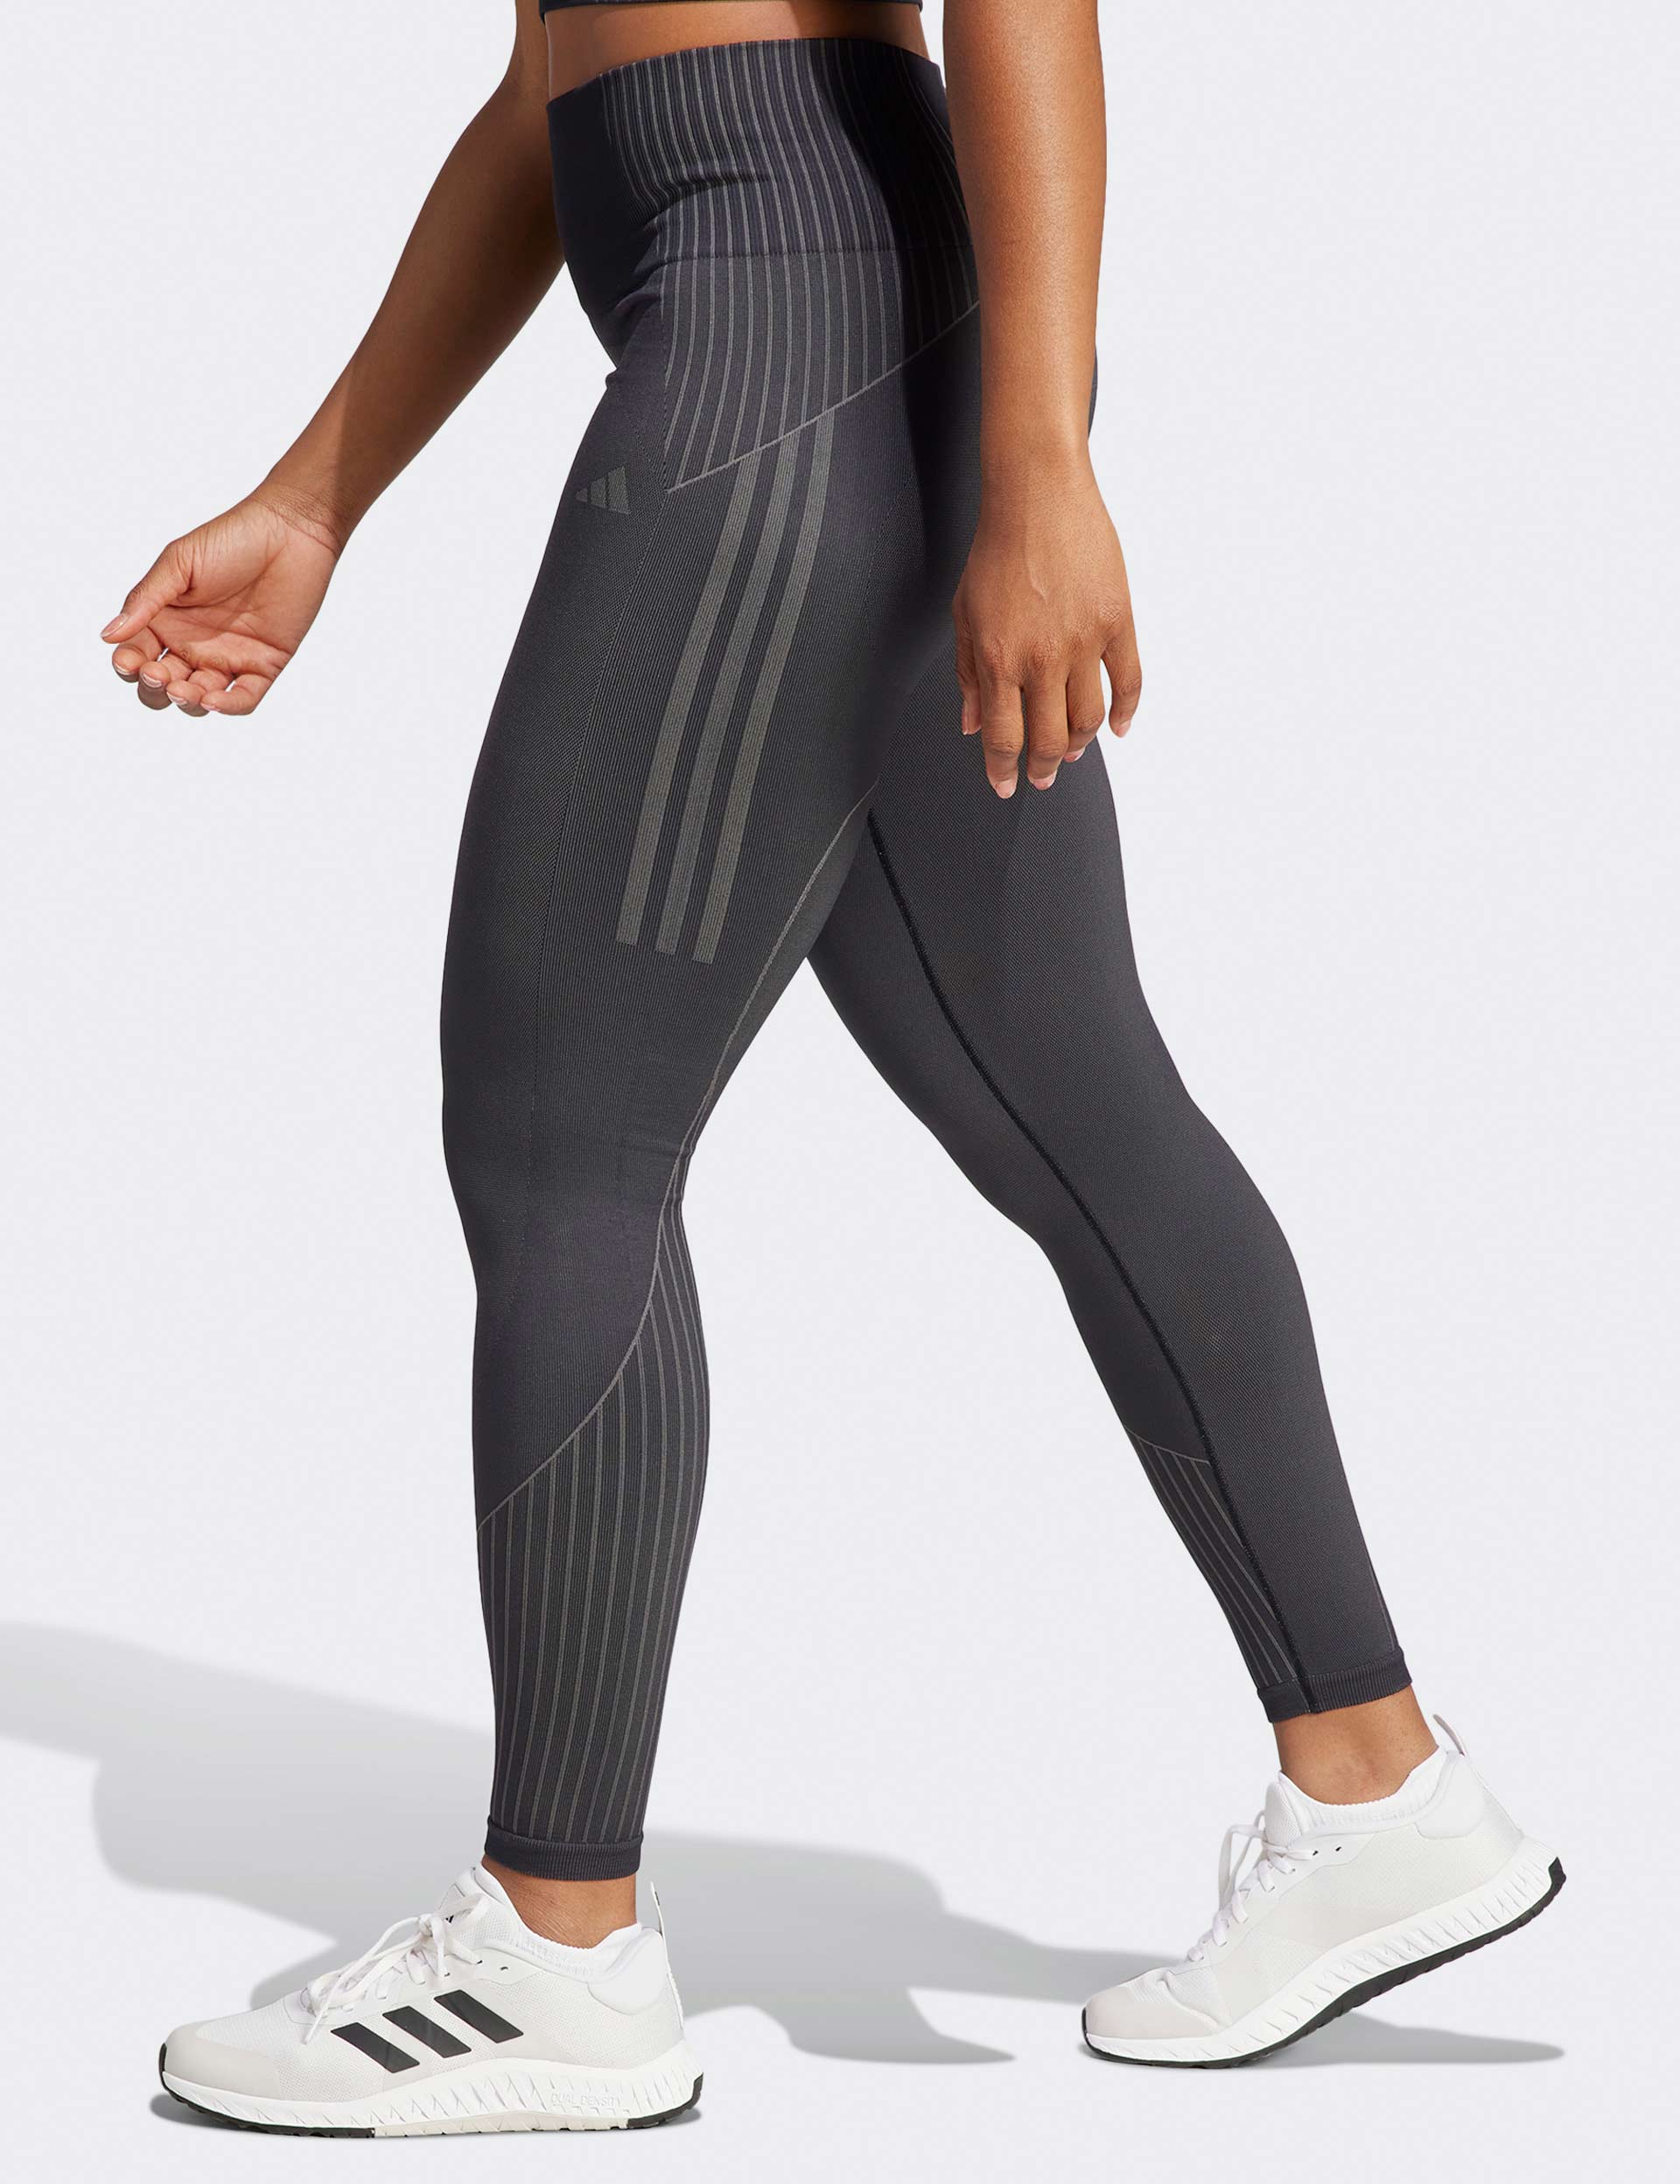 Adidas Women's How We Do Speed Long Tights Grey/Black DP3958 Size Medium